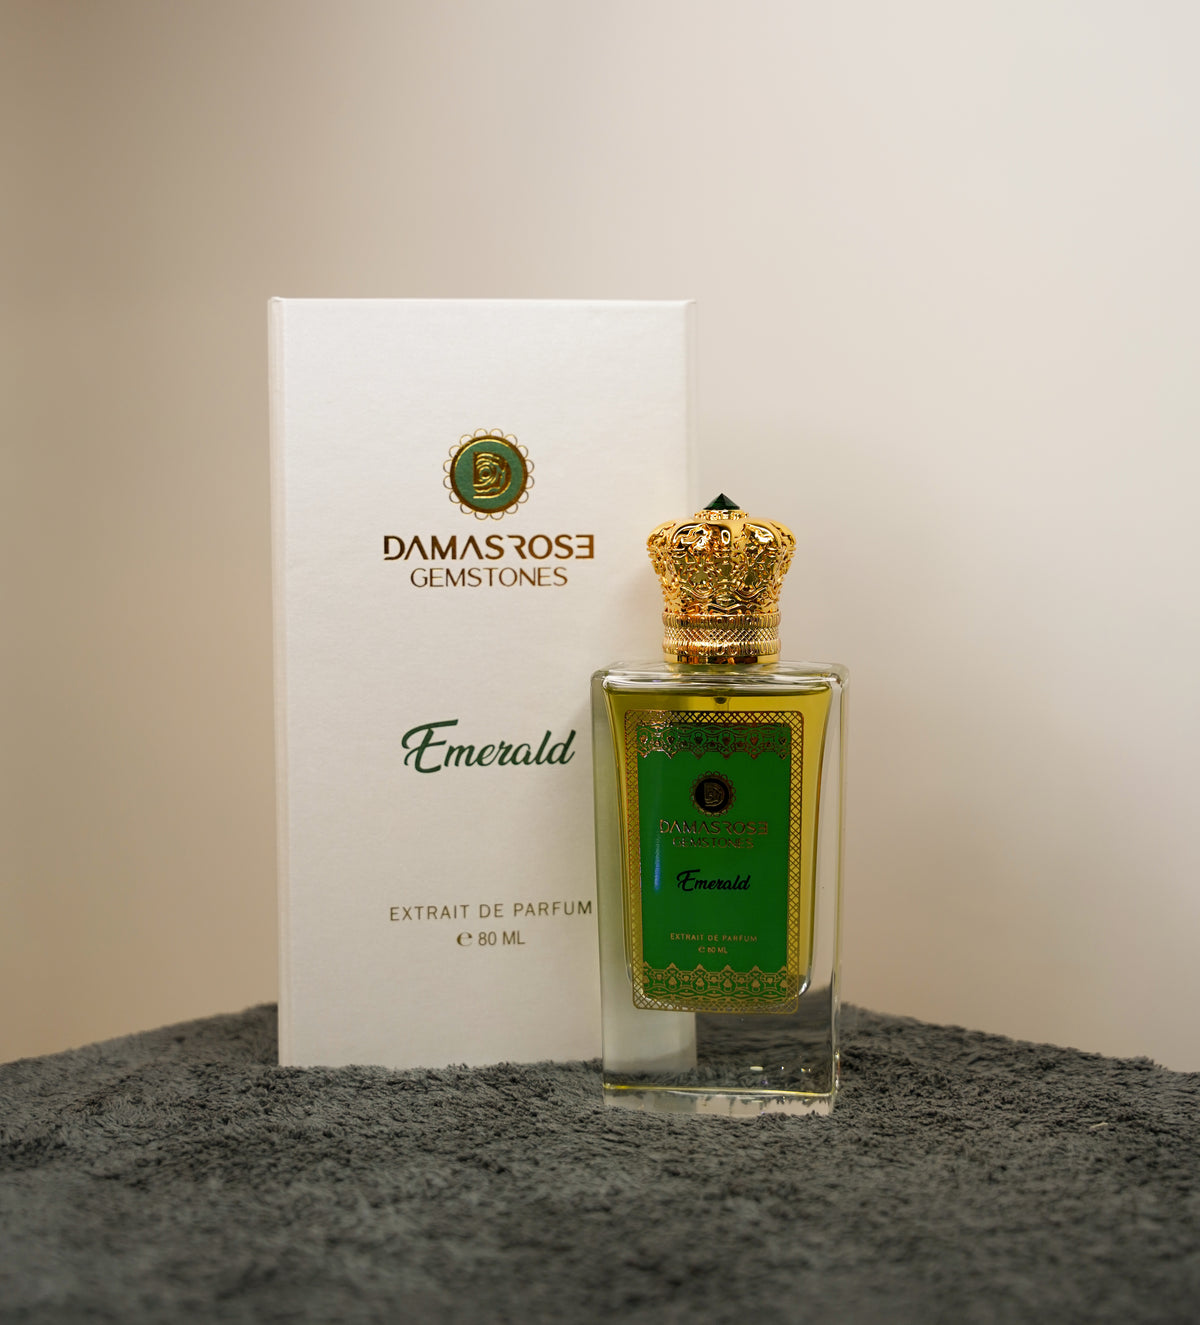 Gems rose Emerald Unisex Eau De Perfume 100ml by Damas Rose